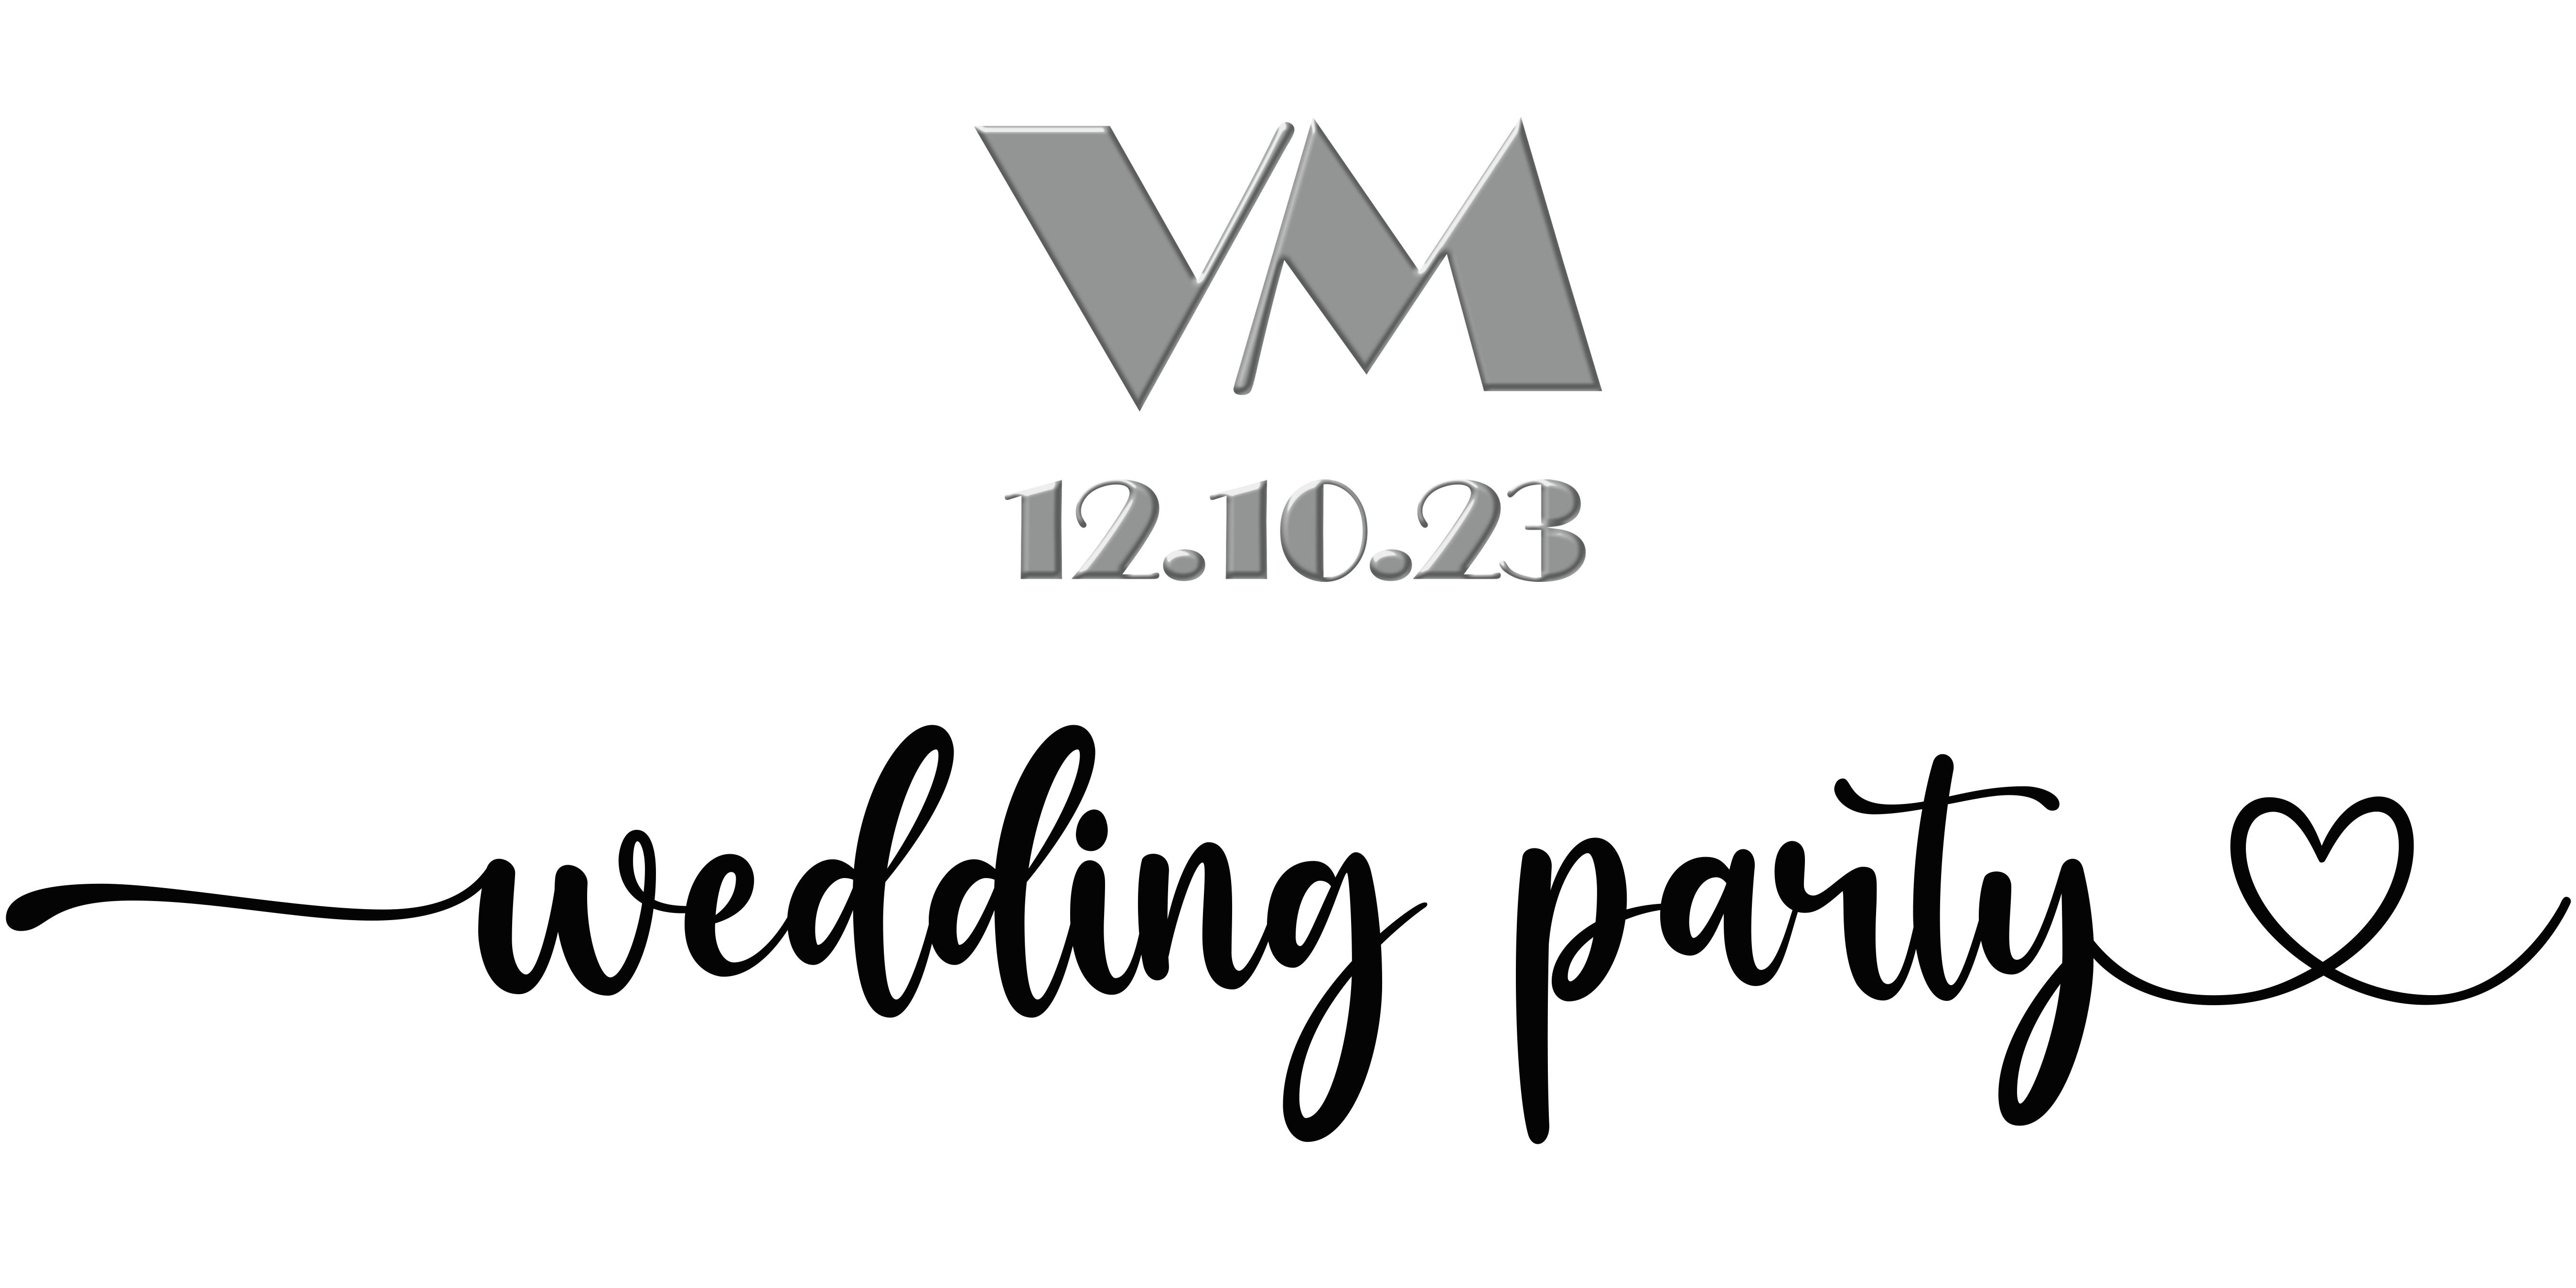 The Wedding Website of Valerie Ikeda and Michael Ikeda